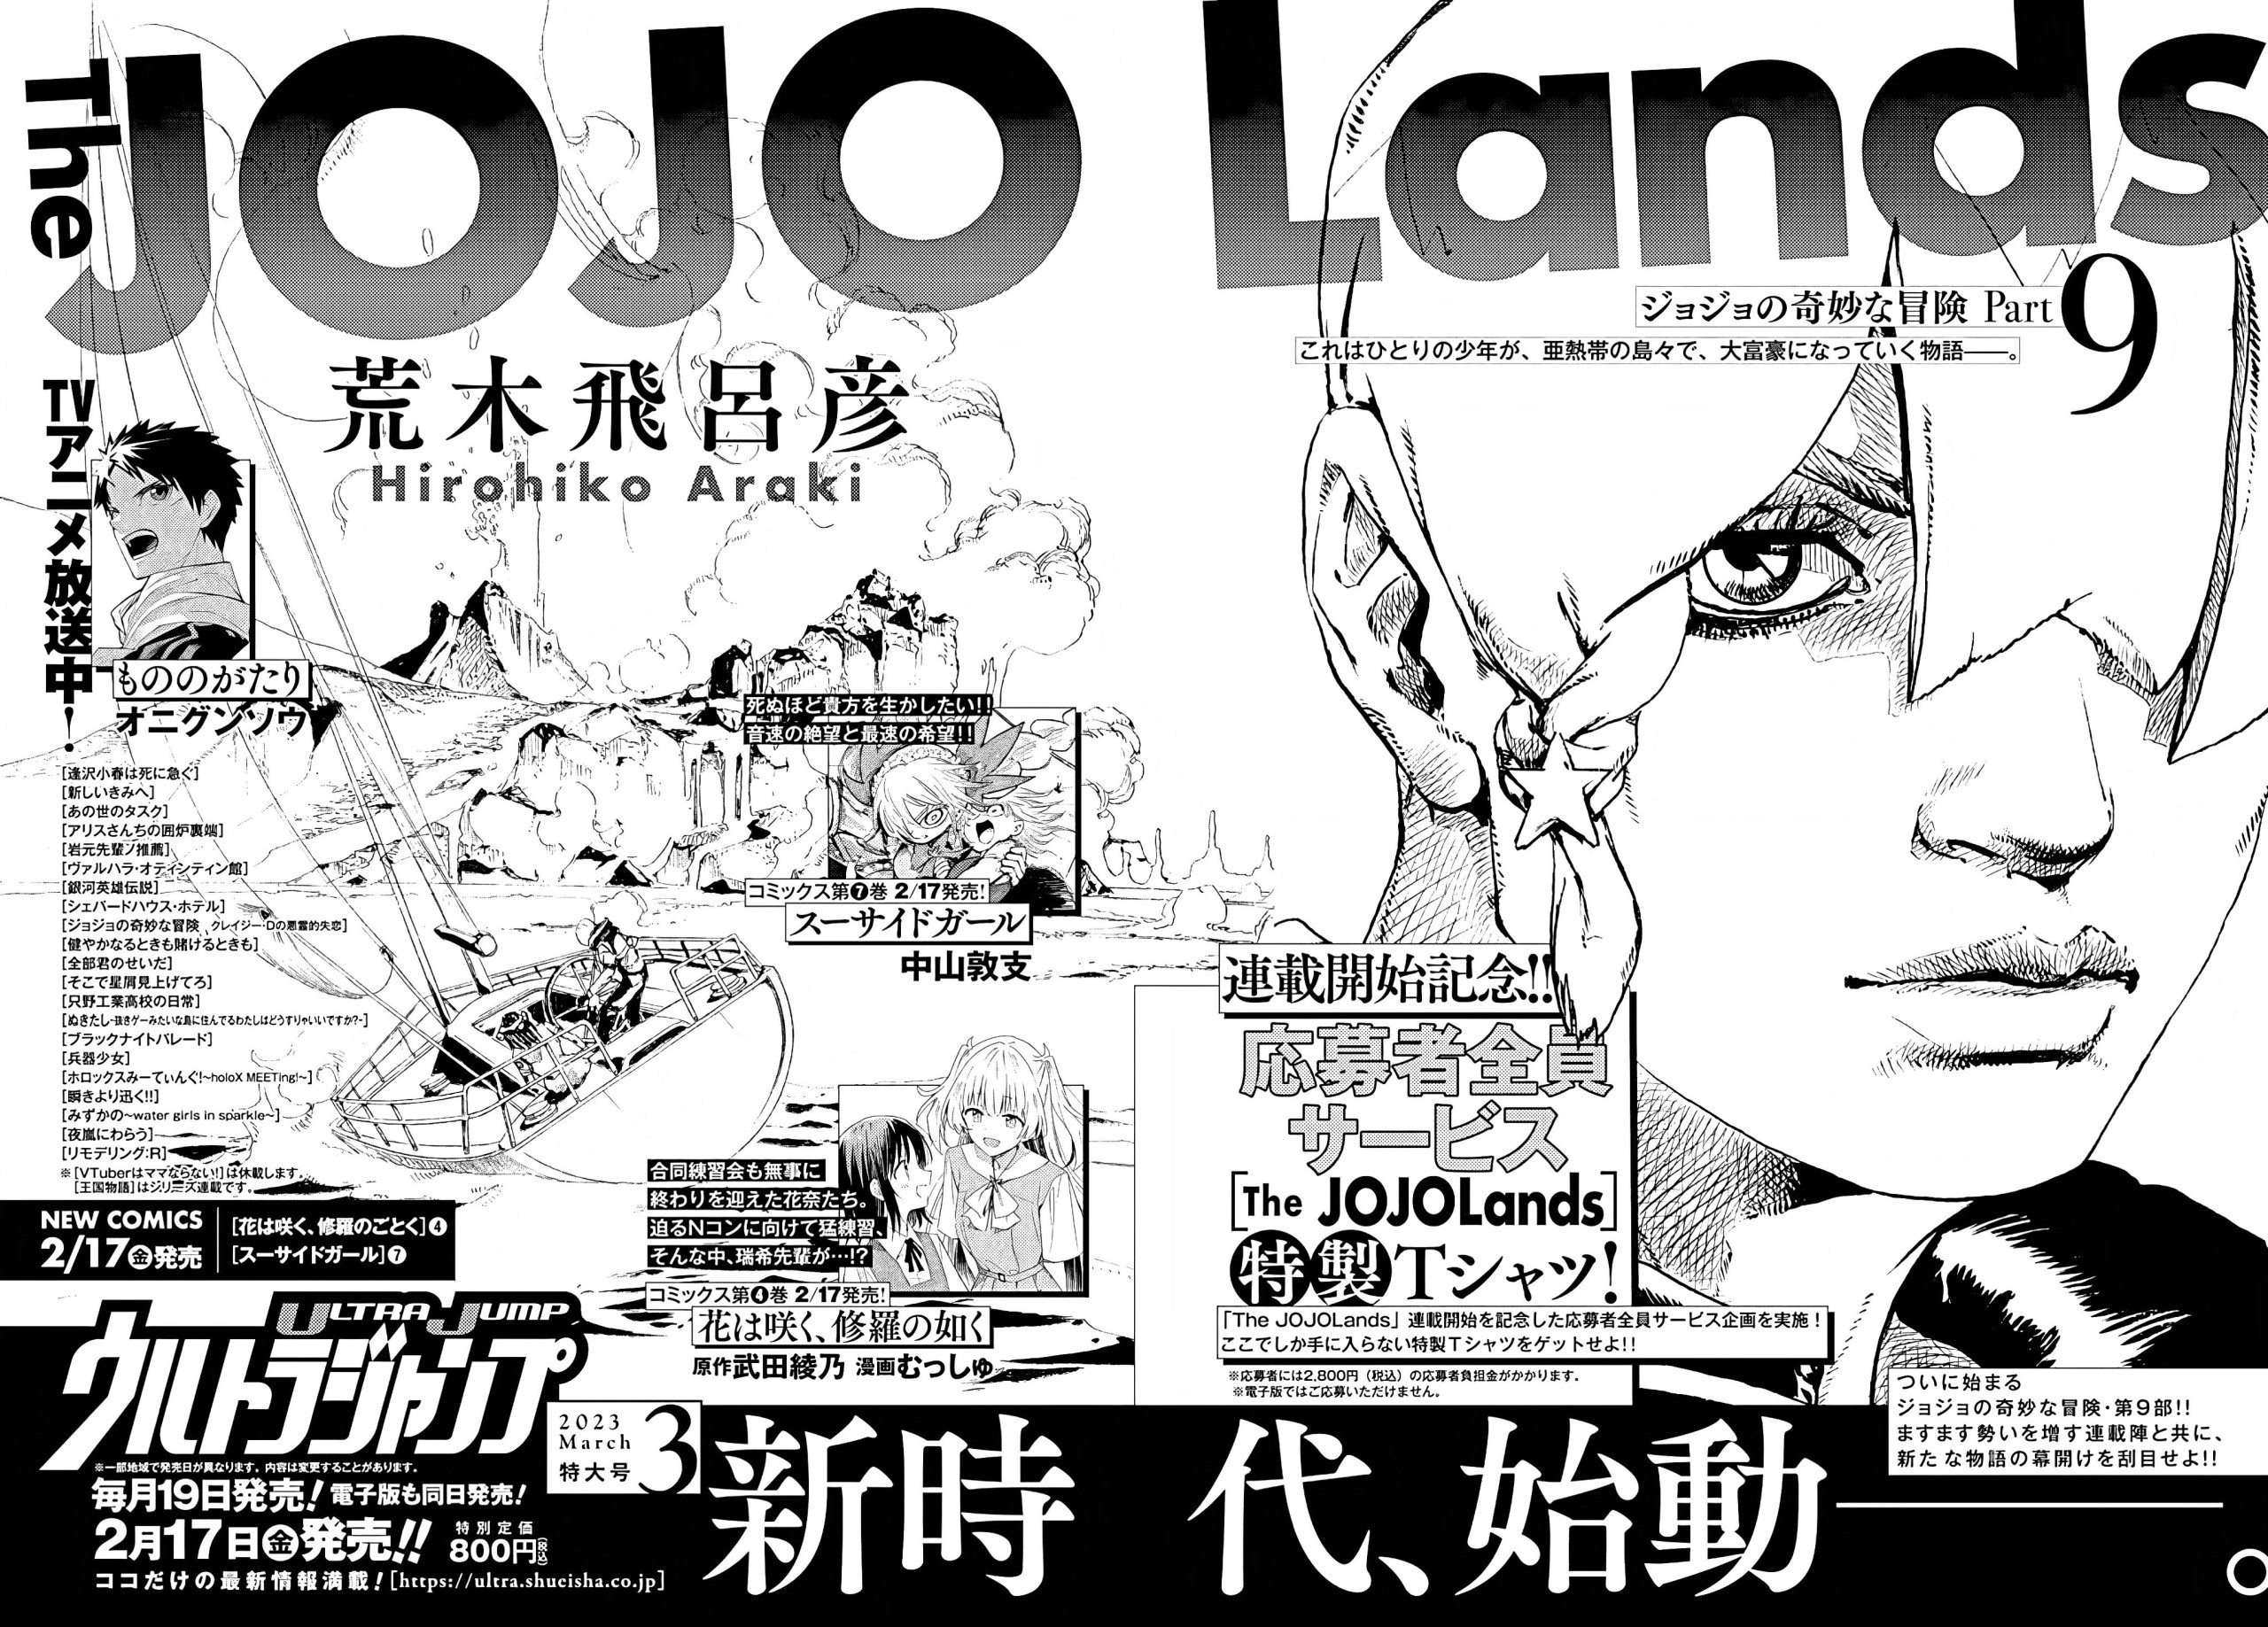 Manga nyhed: JoJo's Bizarre Adventure Manga Part 9 'The JOJOLands' teaser